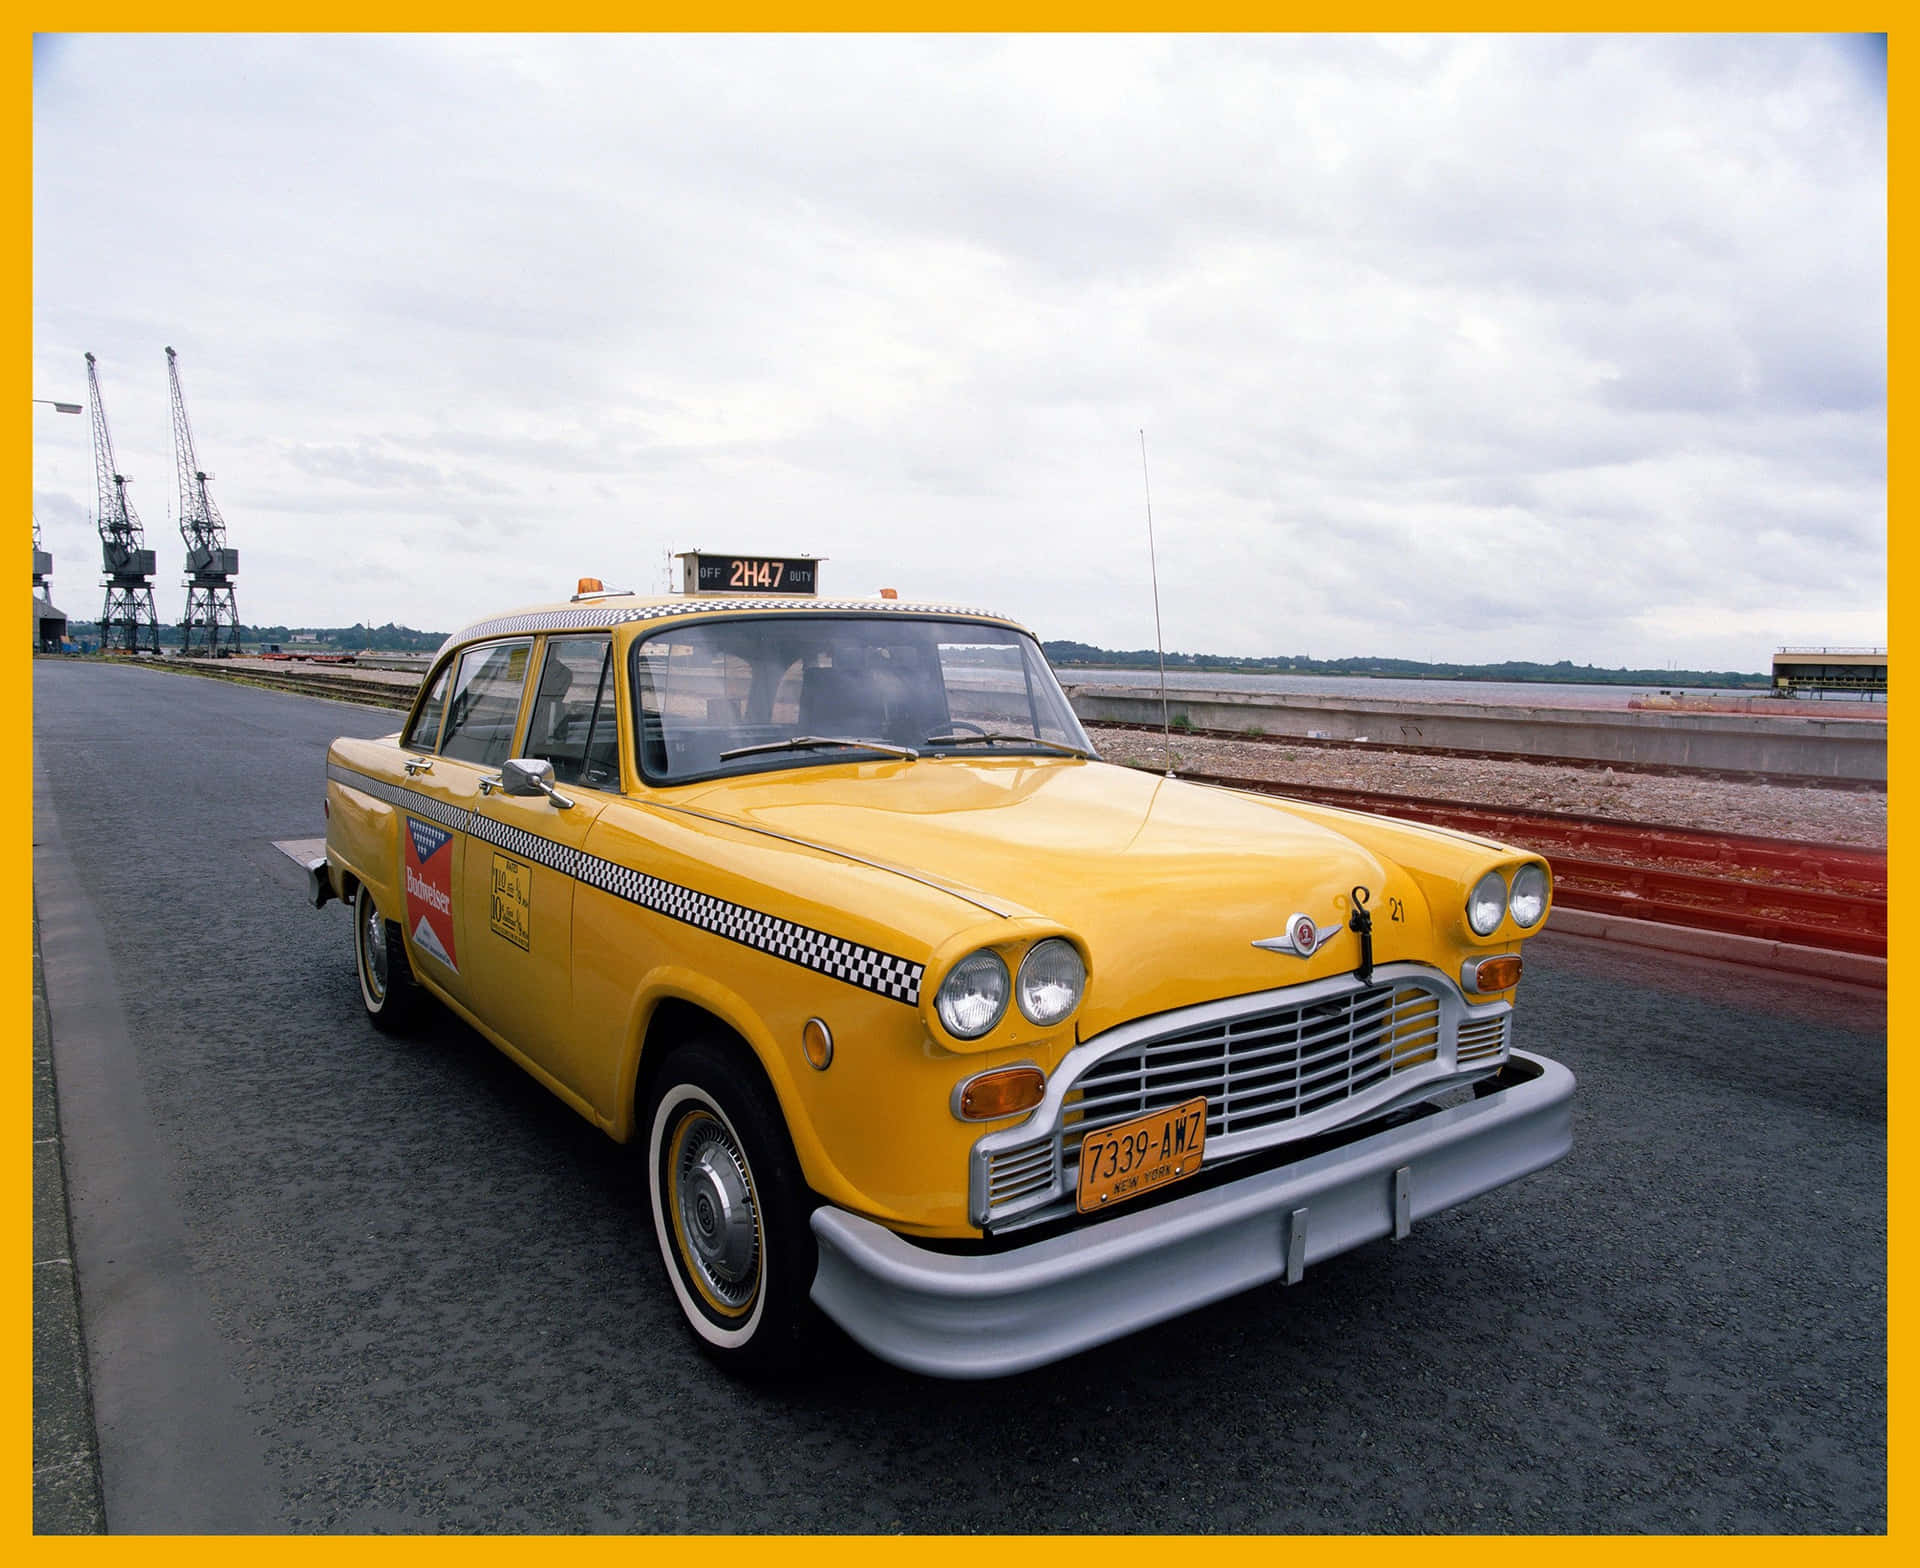 Yellow Taxi in Urban Streets